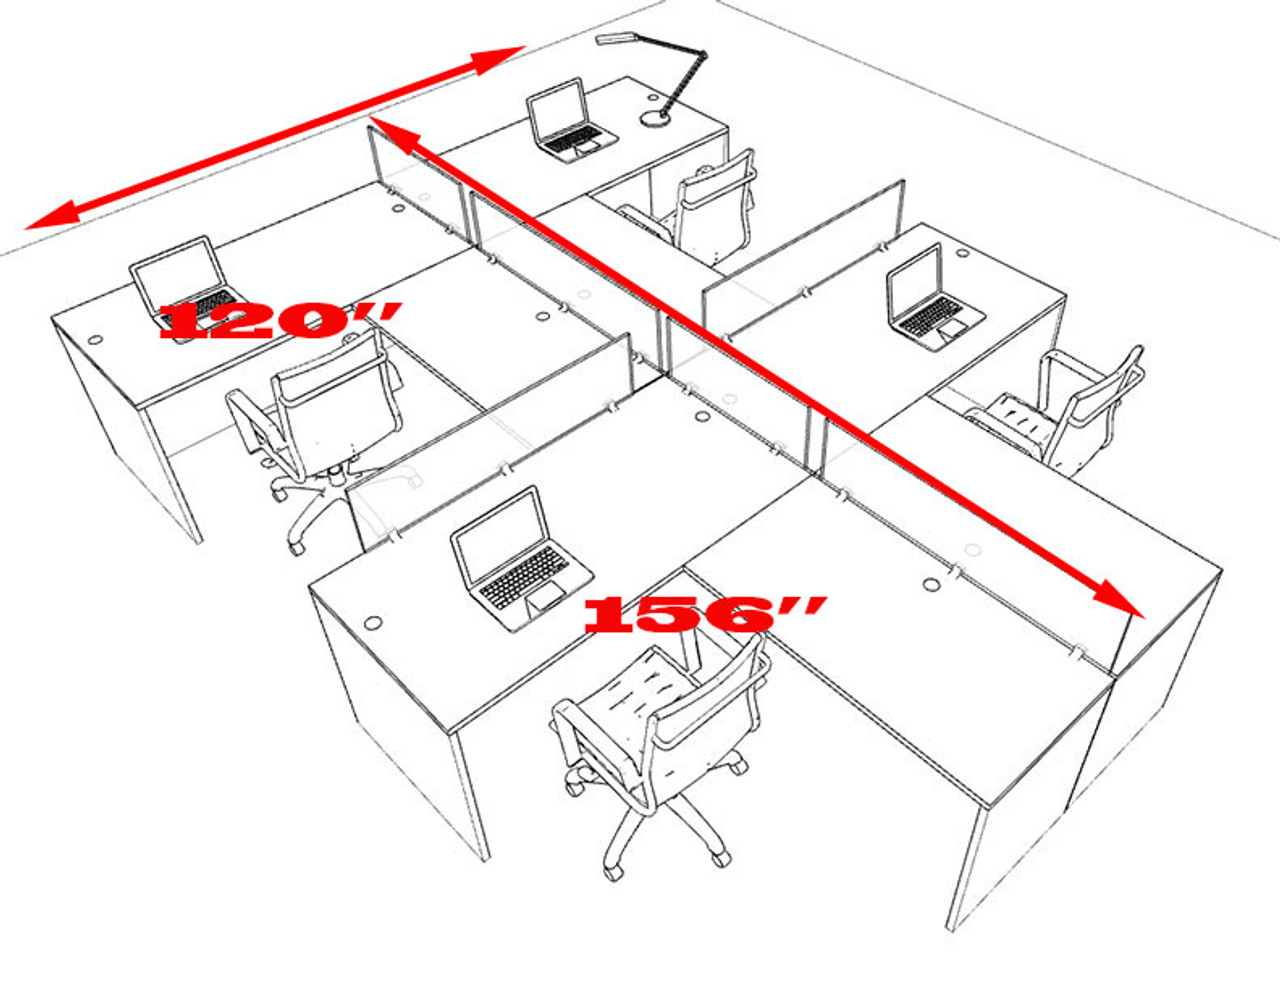 Four Person Modern Accoustic Divider Office Workstation Desk Set, #OT-SUL-SPRB47